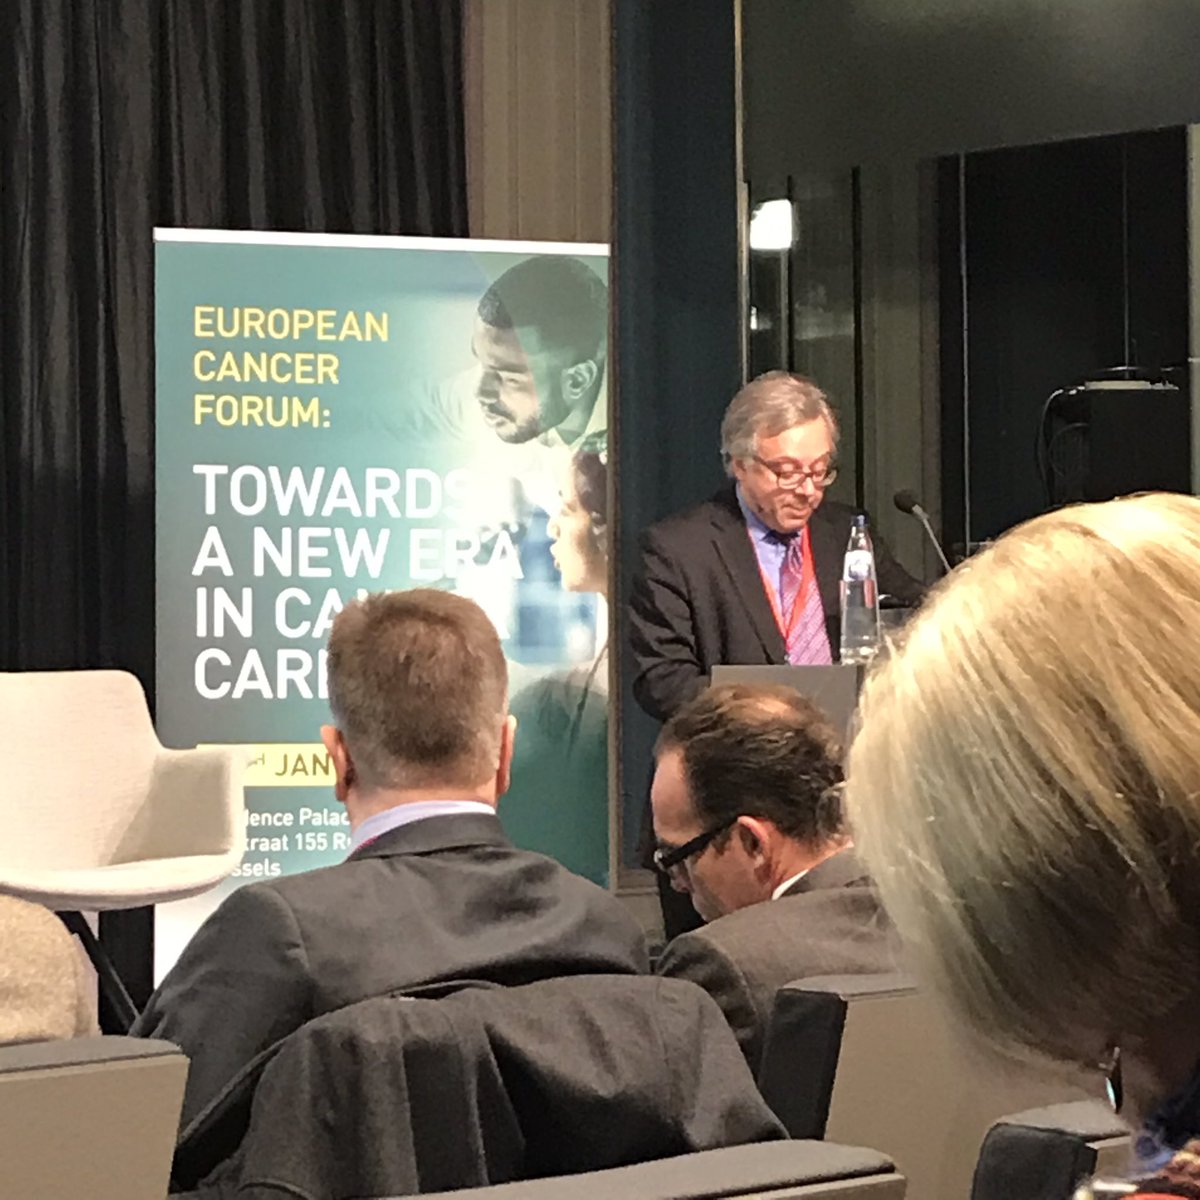 Martin Seychell #europeancanerforum keynote on Europe beating cancer plan. Need to improve equality of #access to #eucancer treatments